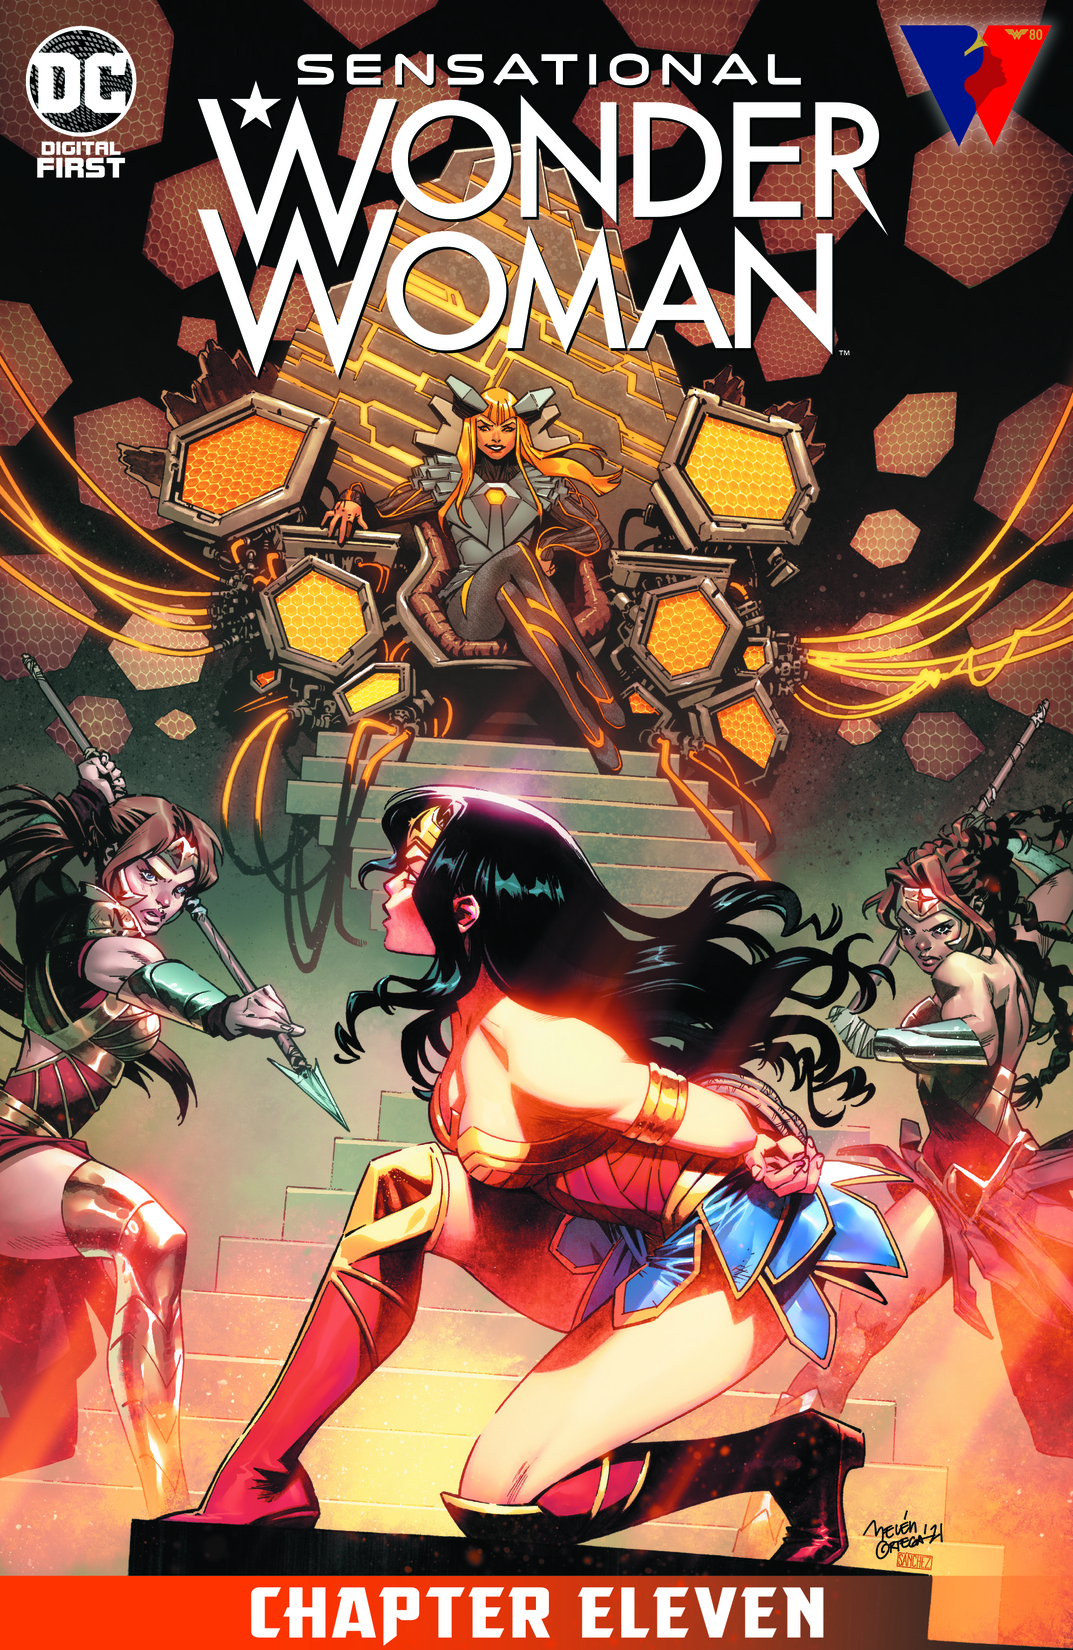 Sensational Wonder Woman #11 preview images